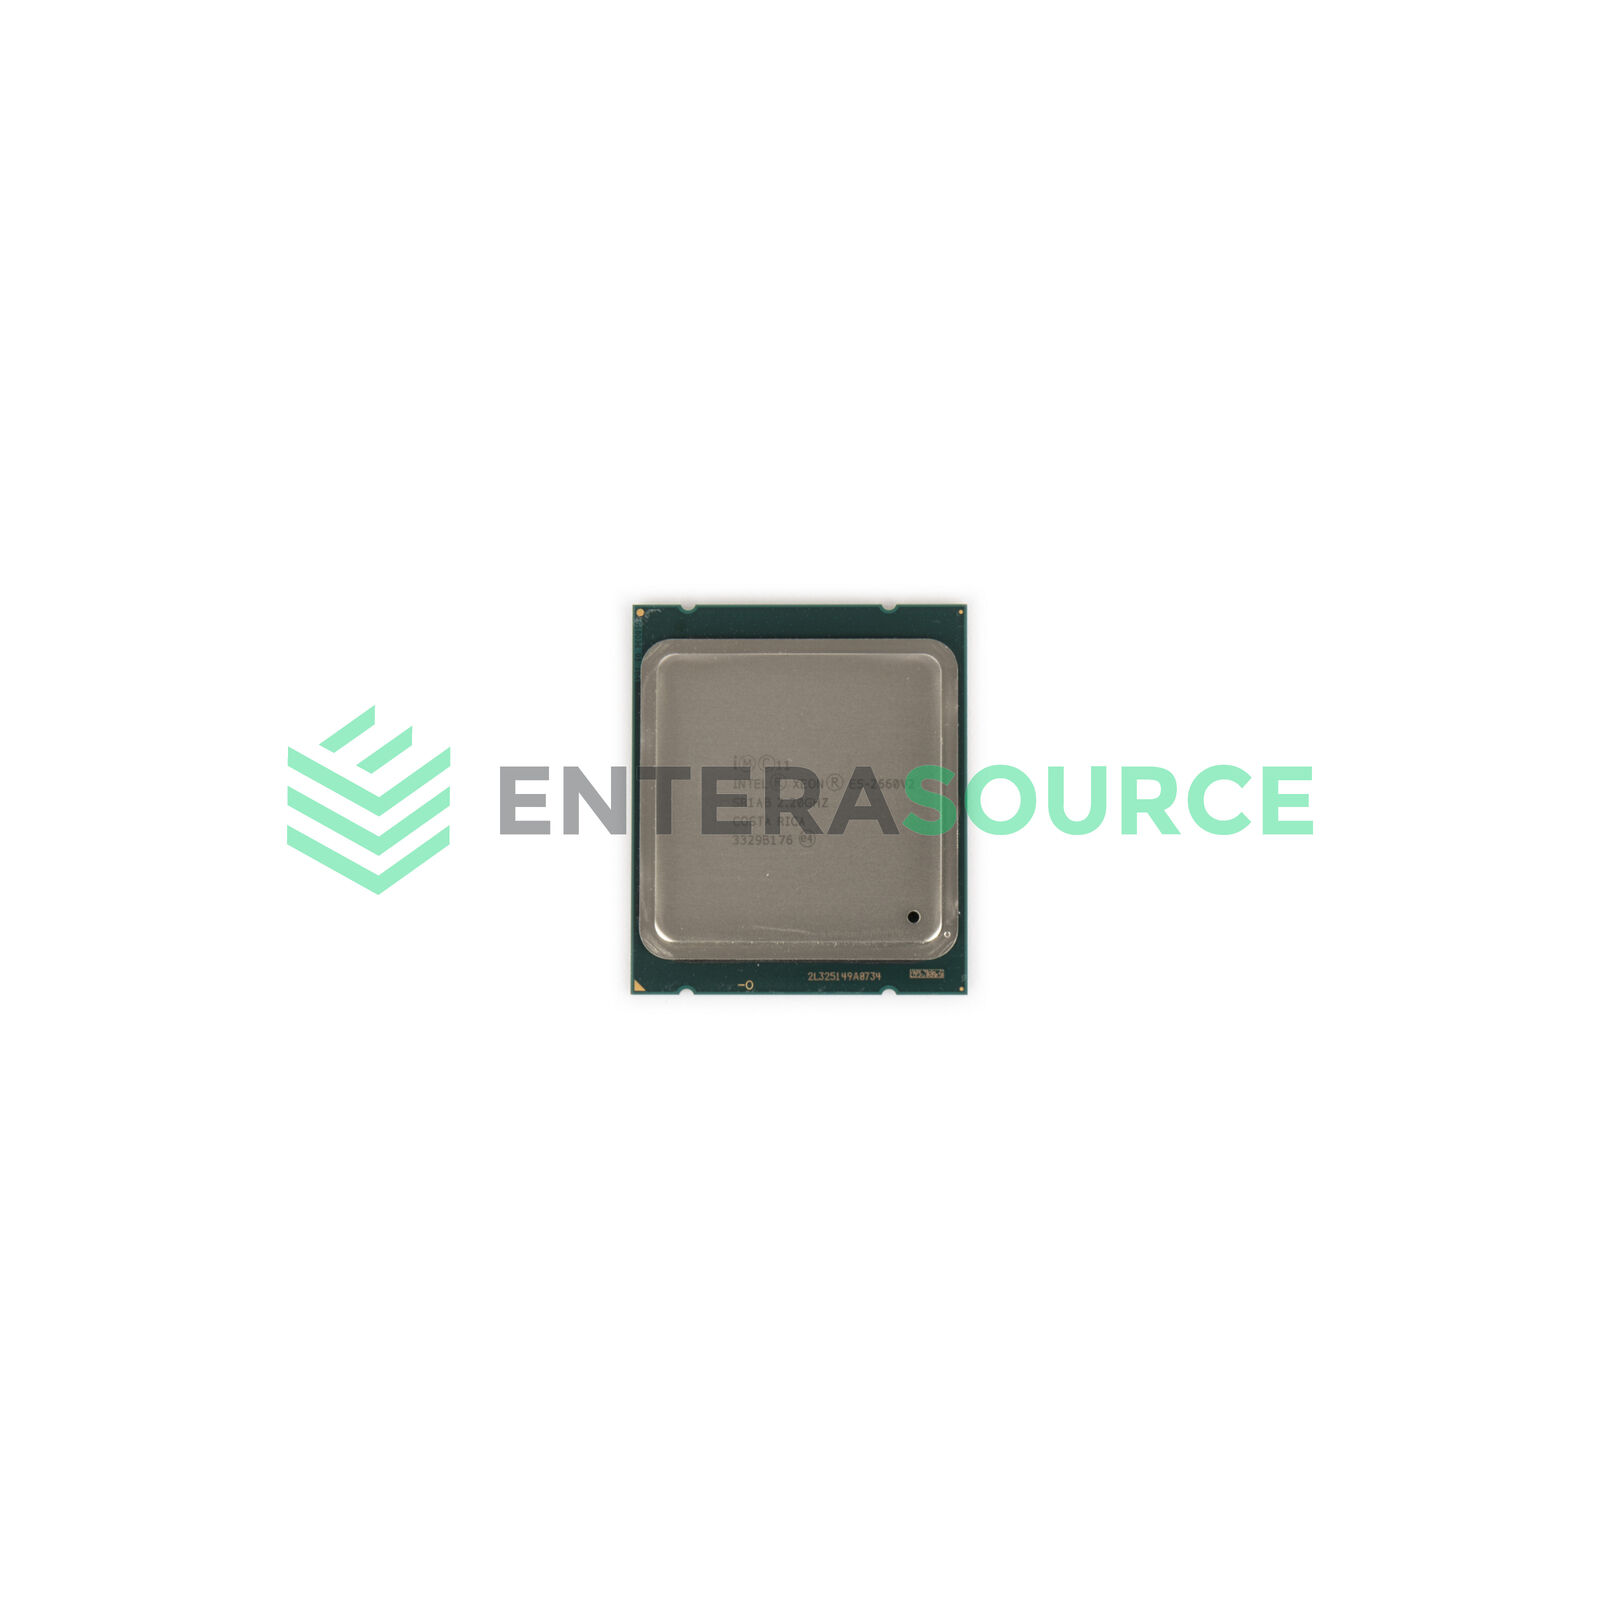 Intel Xeon E5-2660 v2 2.2GHz 10 Core 25MB 8GT/s 95W Processor SR1AB